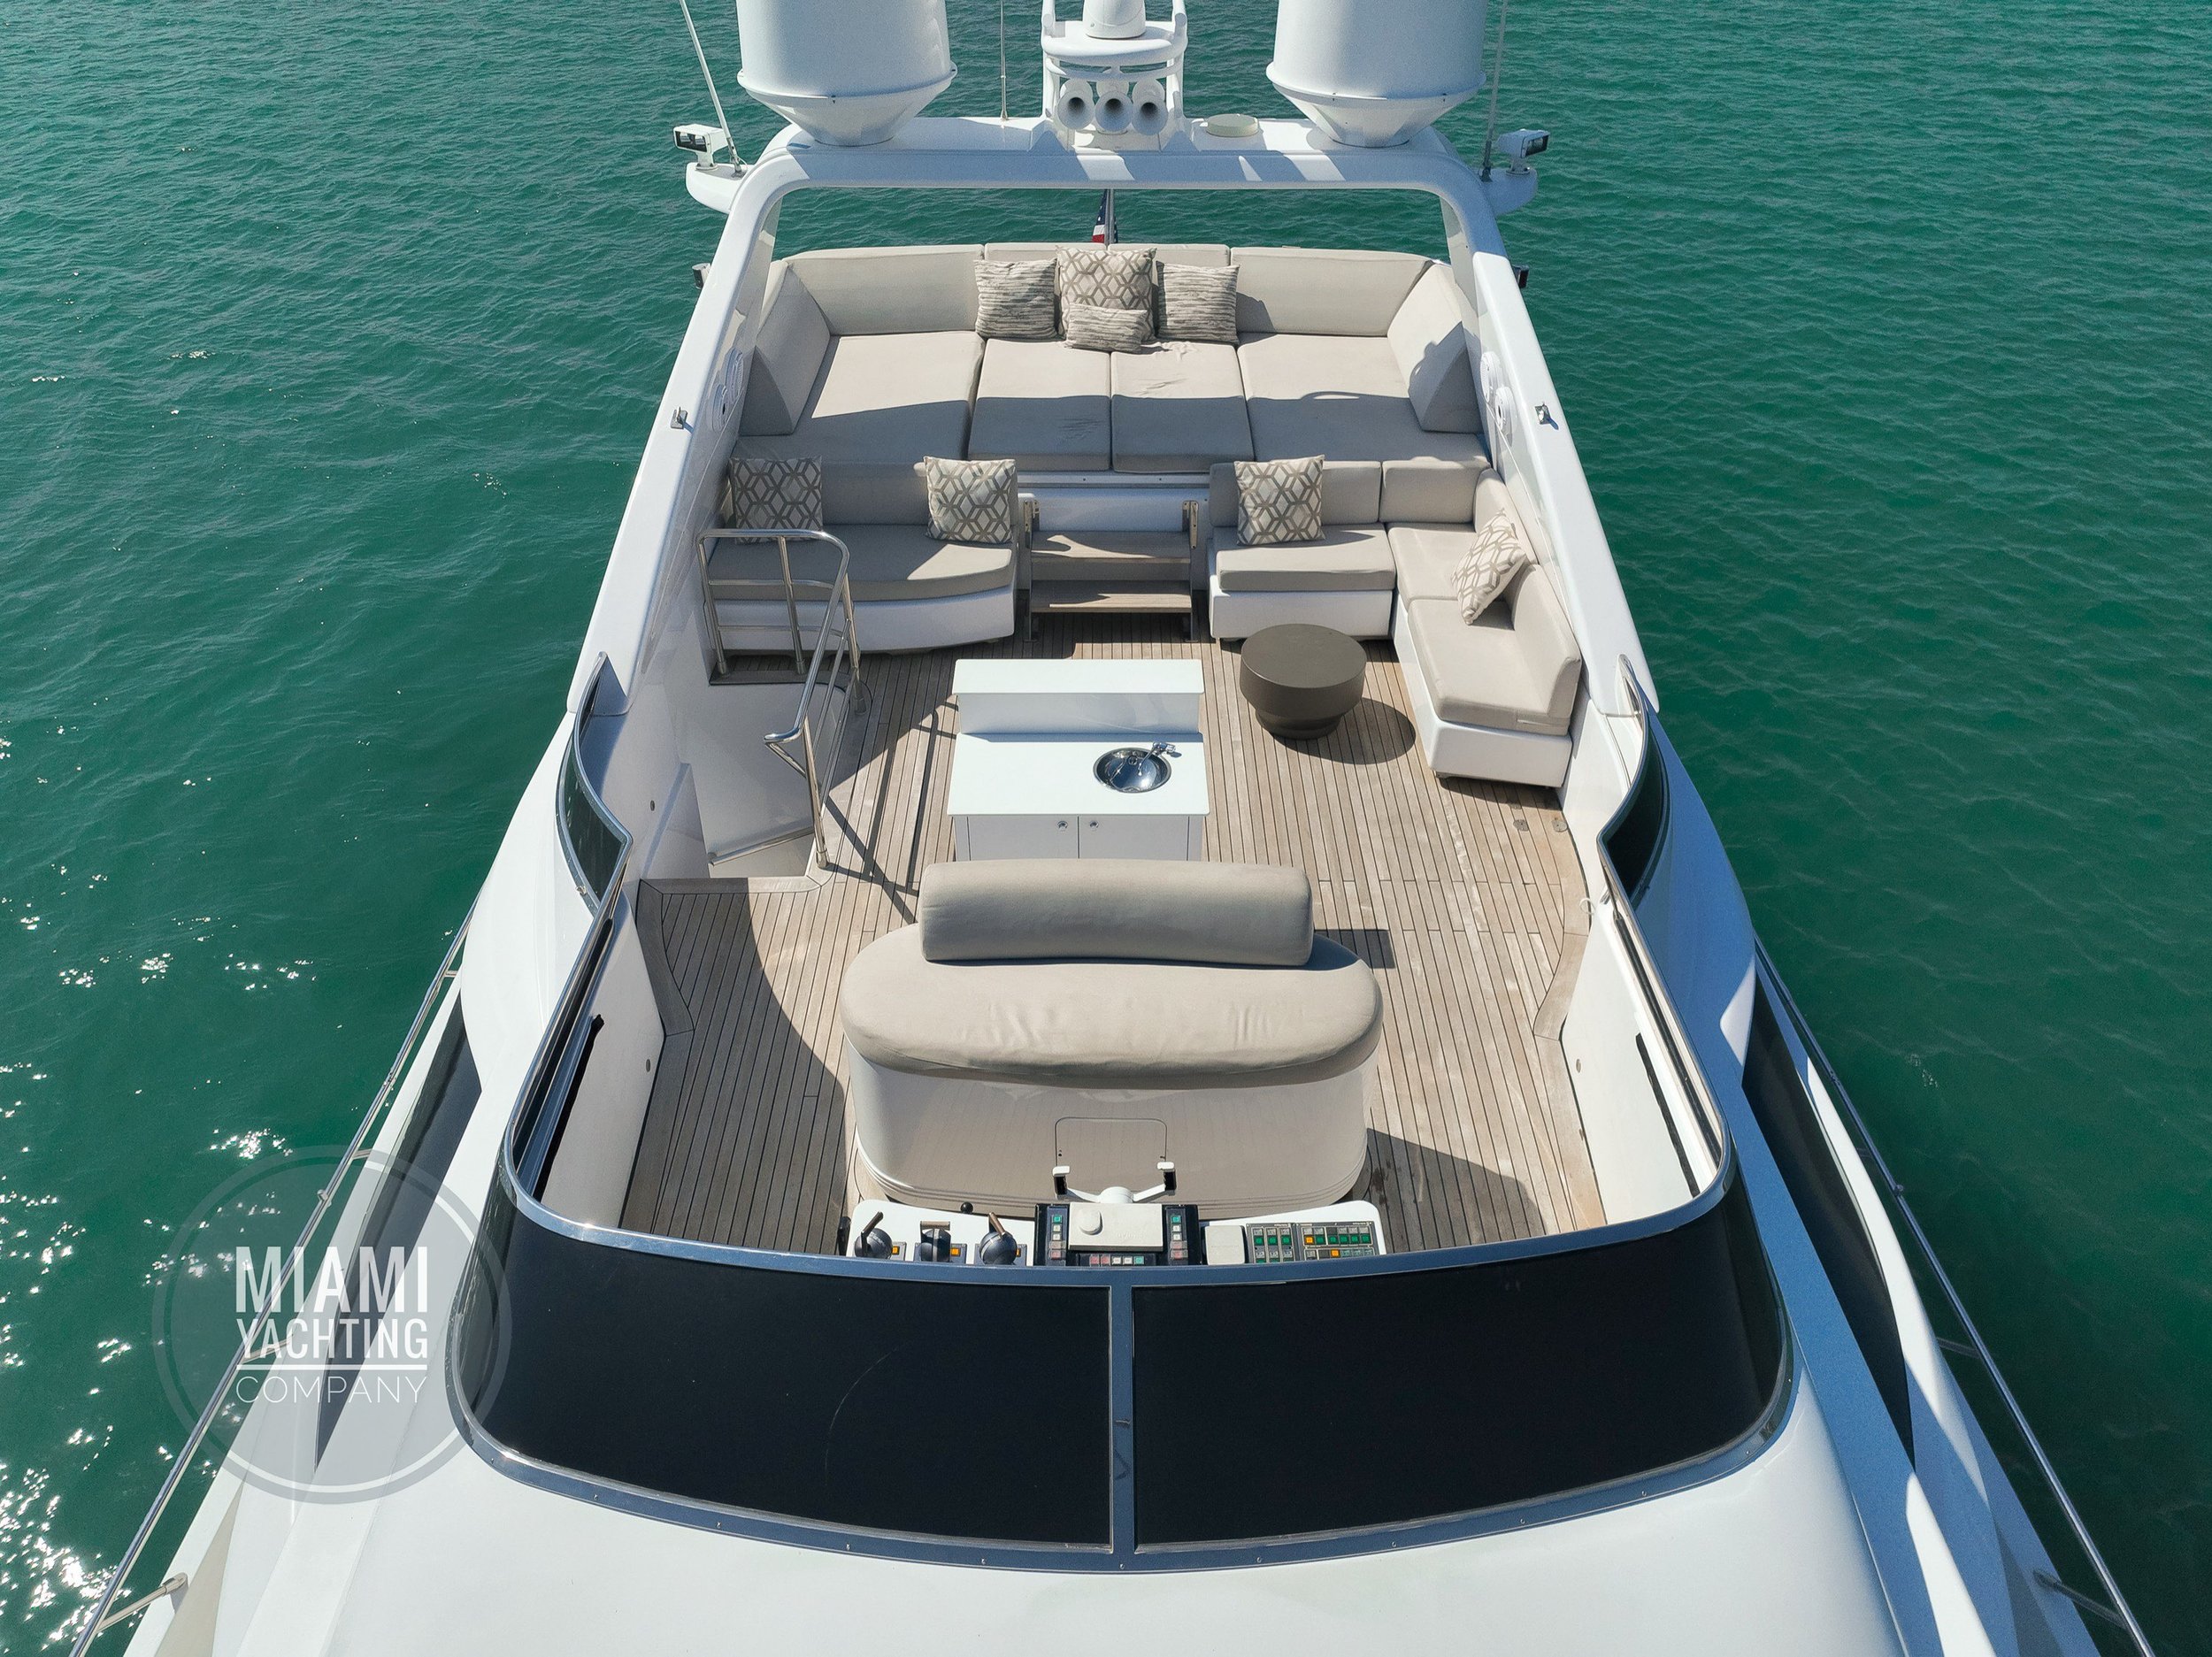 Miami_Yachting_Company_105_Leopard_Flybridge24.jpg